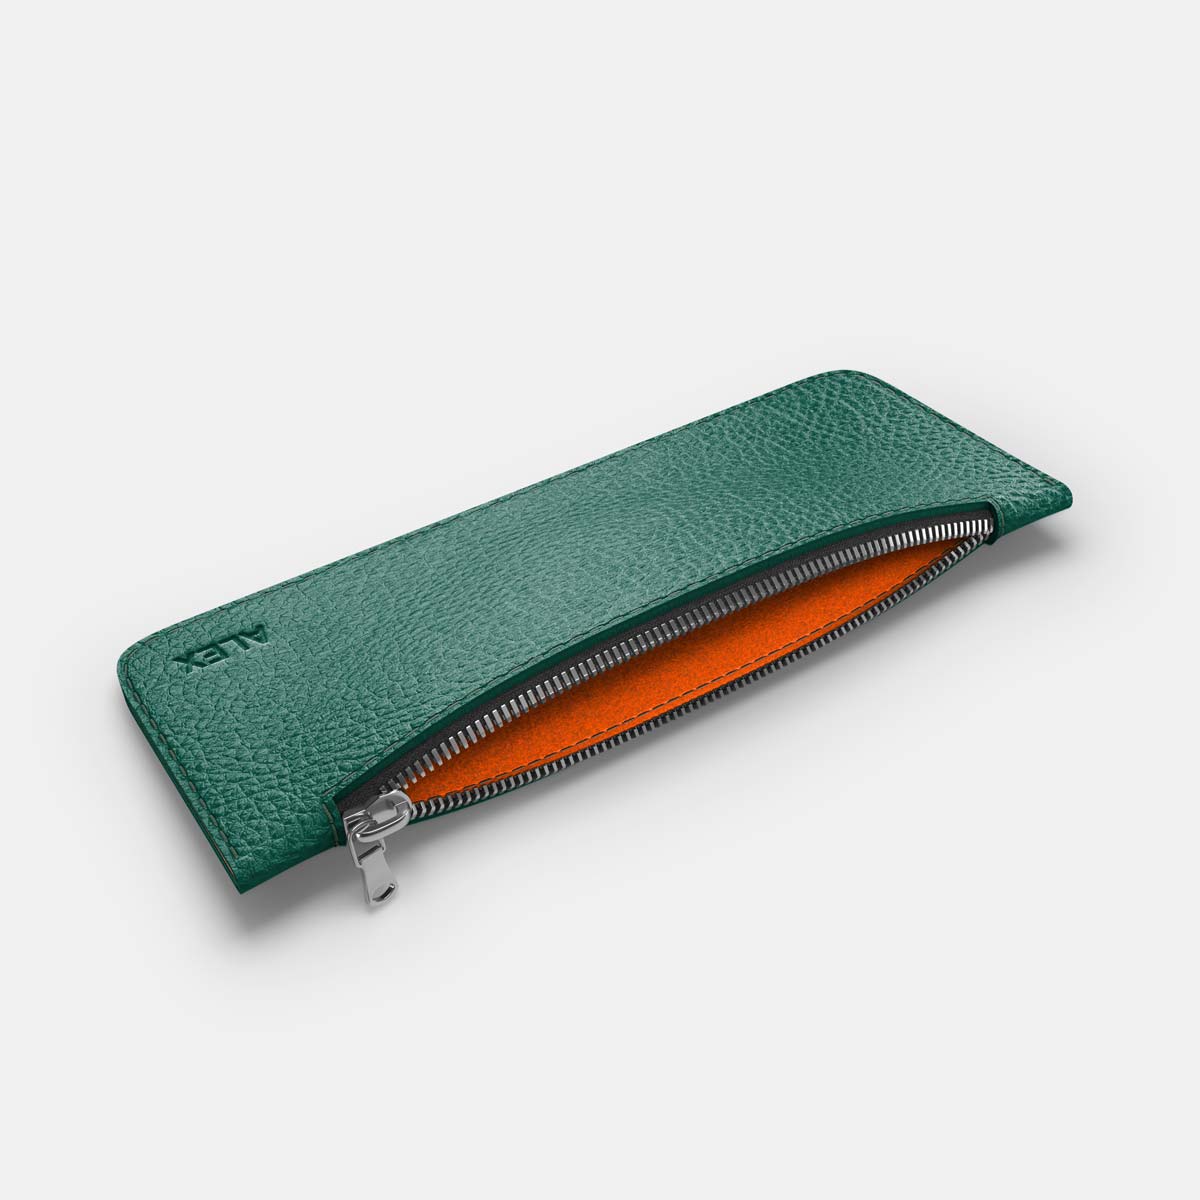 Leather Pencil Case - Avocado Green and Orange - RYAN London